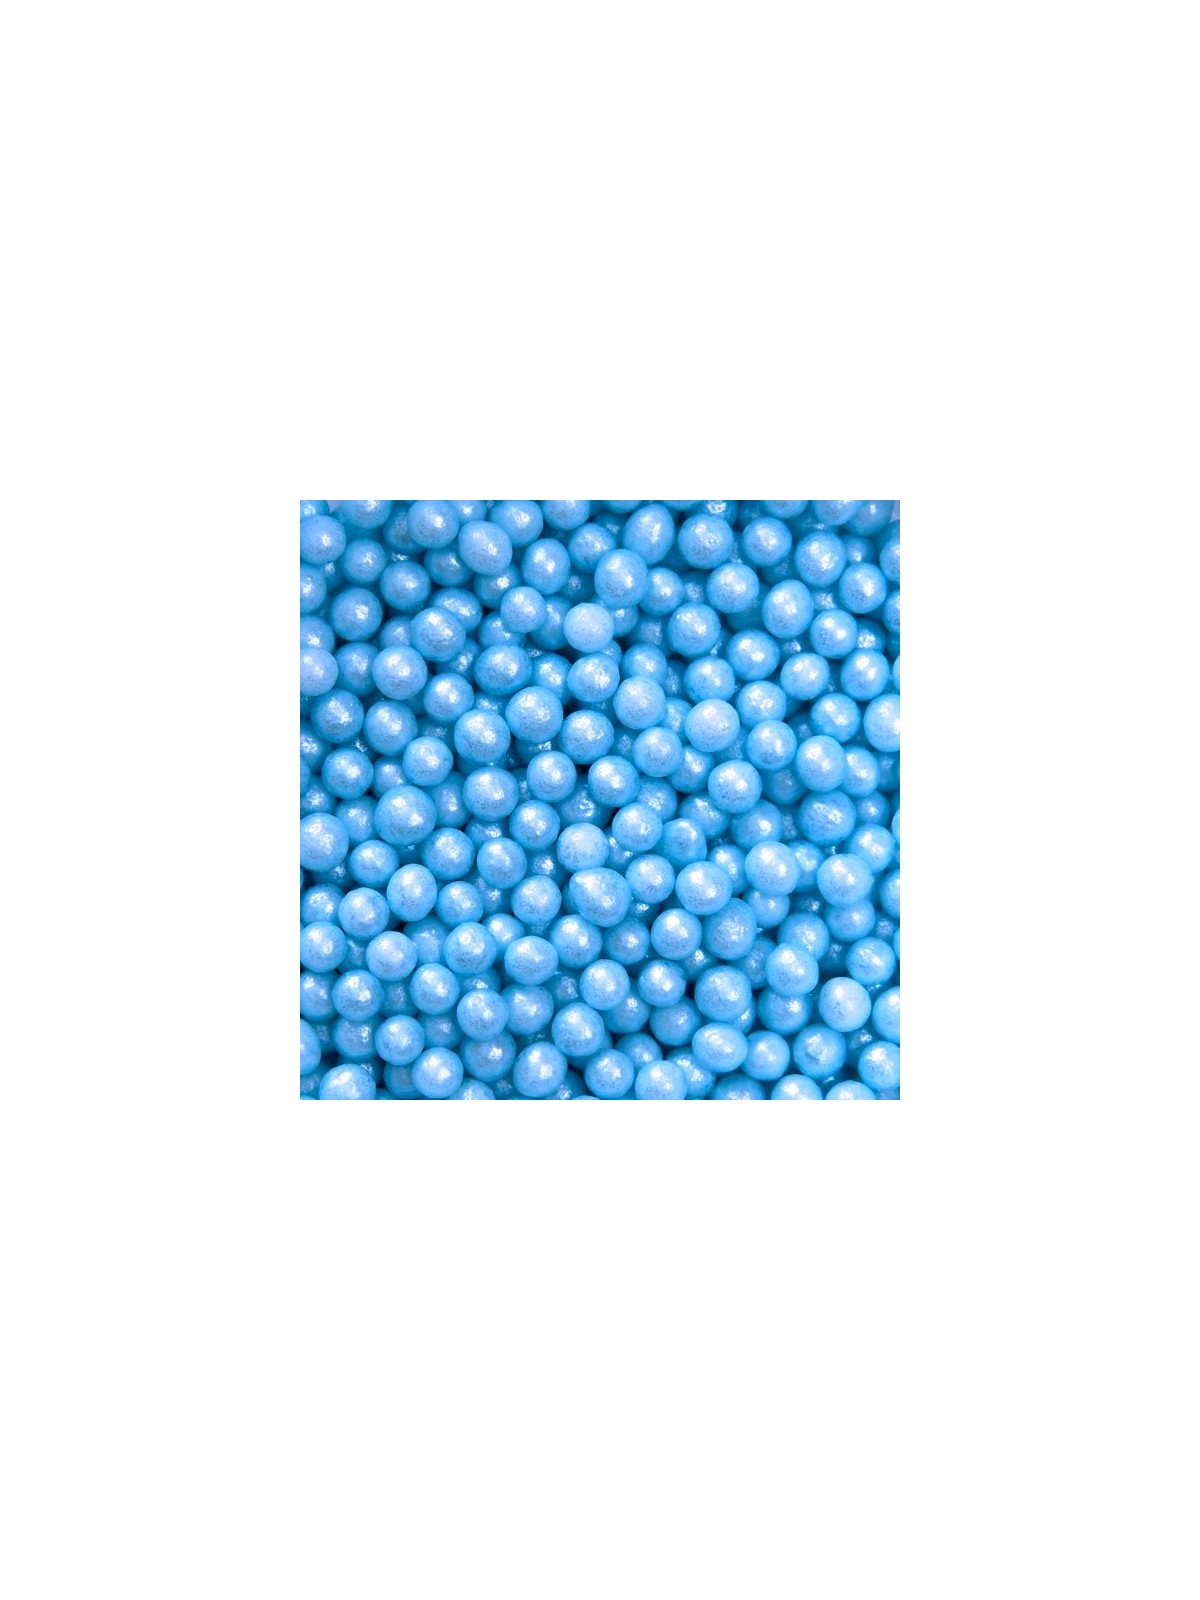 Zuckerperlen 4mm - perlenblau  - 100g